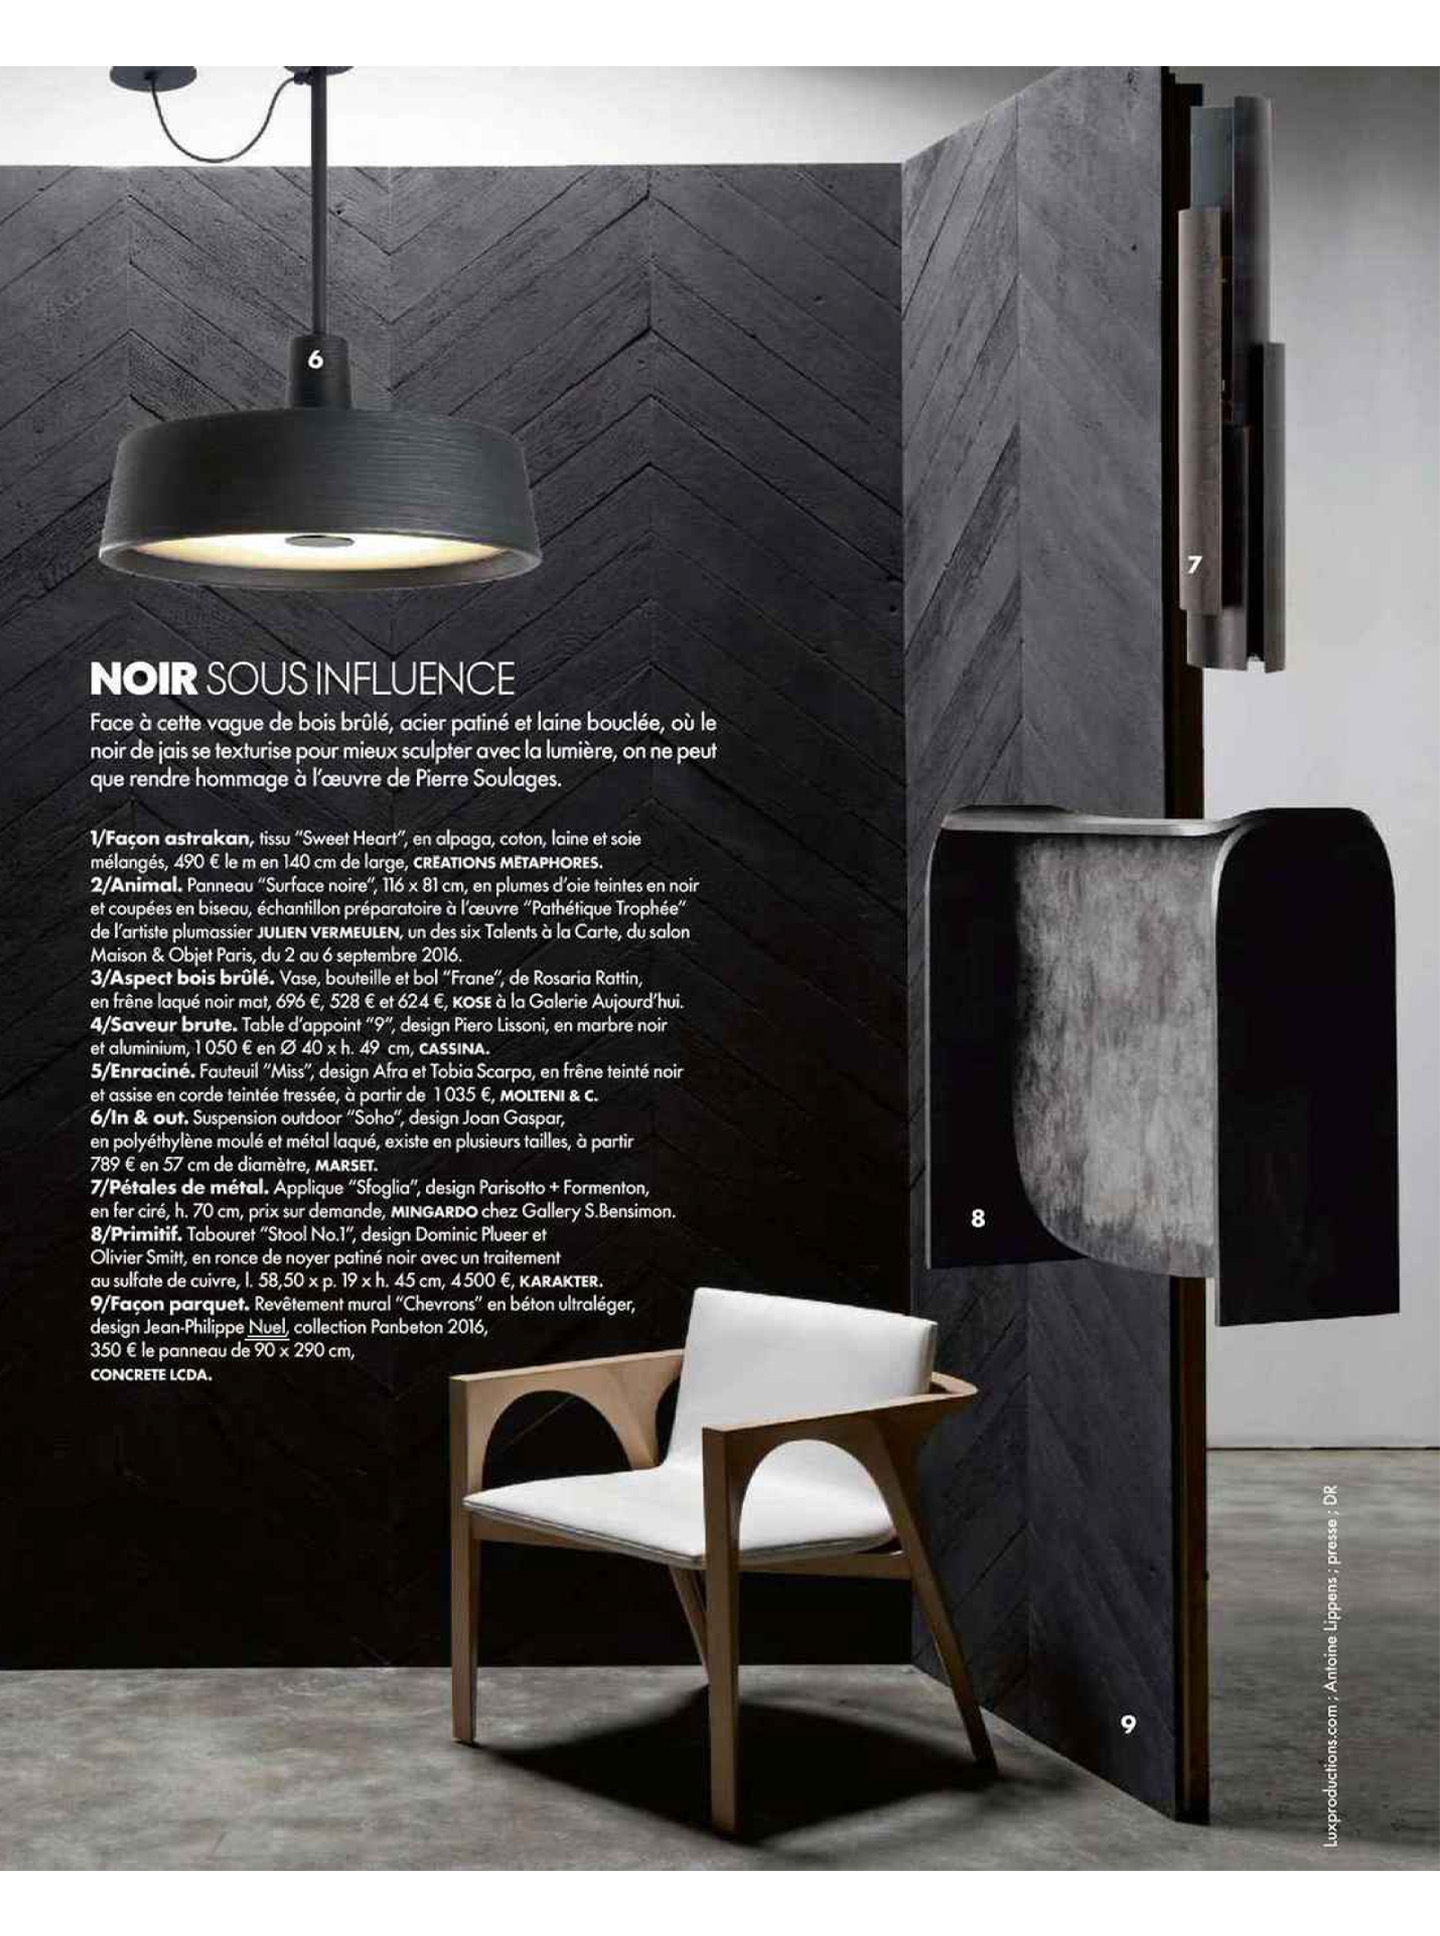 article on concrete lcda decorative panels created by the interior design studio jean-philippe nuel and concrete lcda in elle décoration magazine